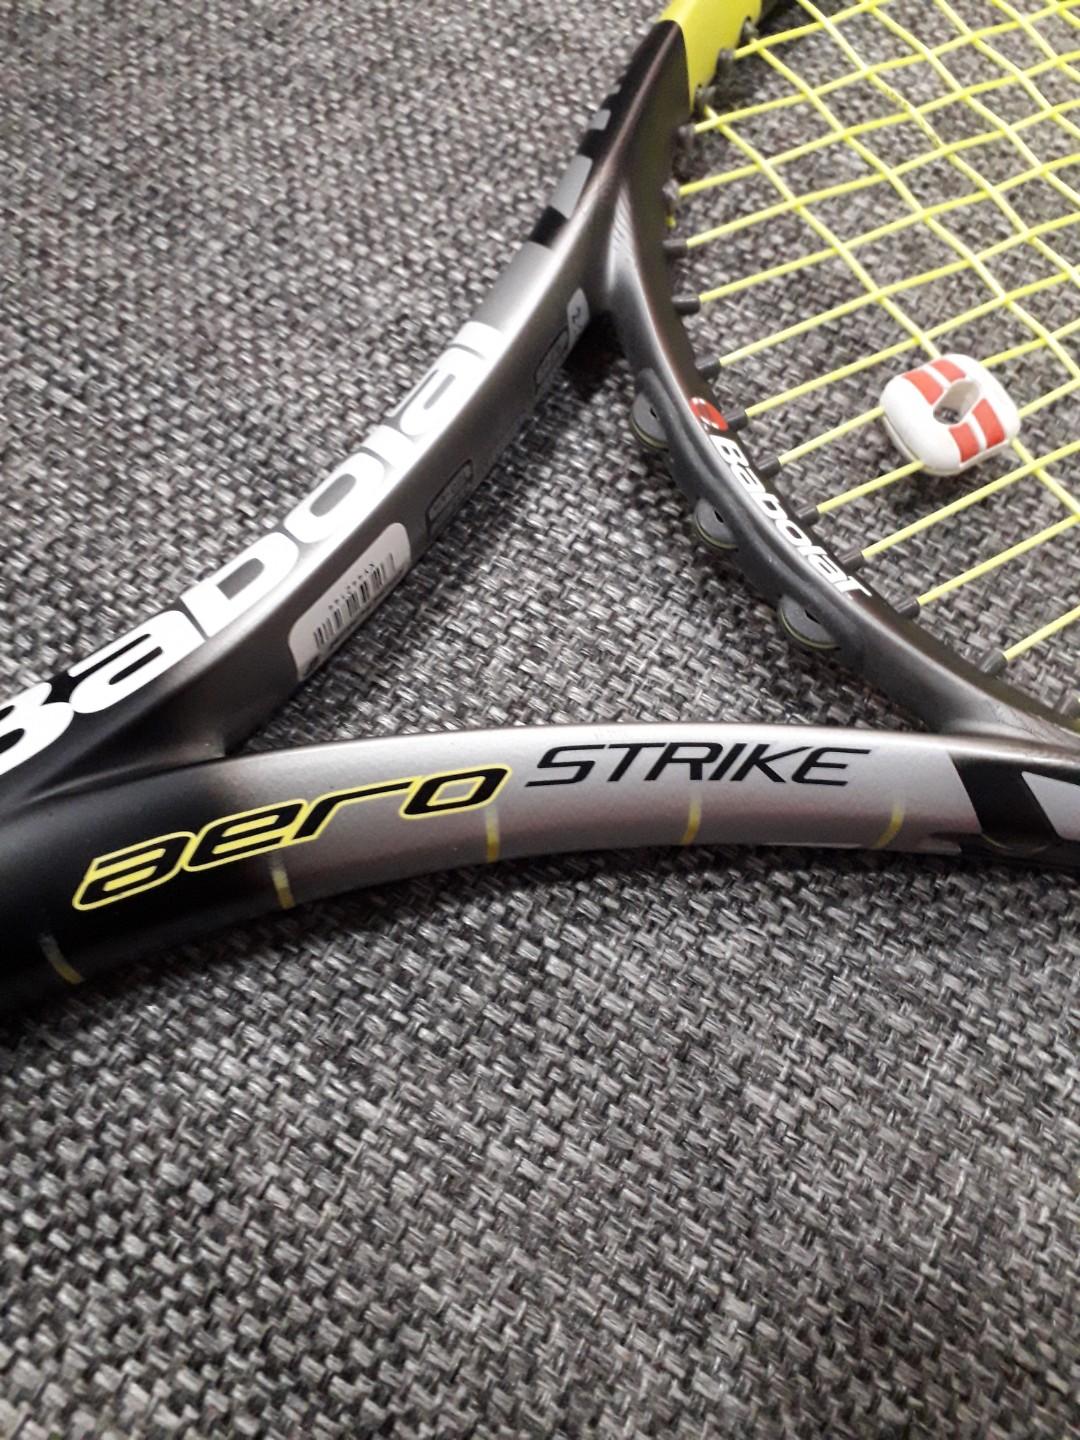 Babolat Aero Strike tennis racket, Sports Equipment, Sports & Games ...